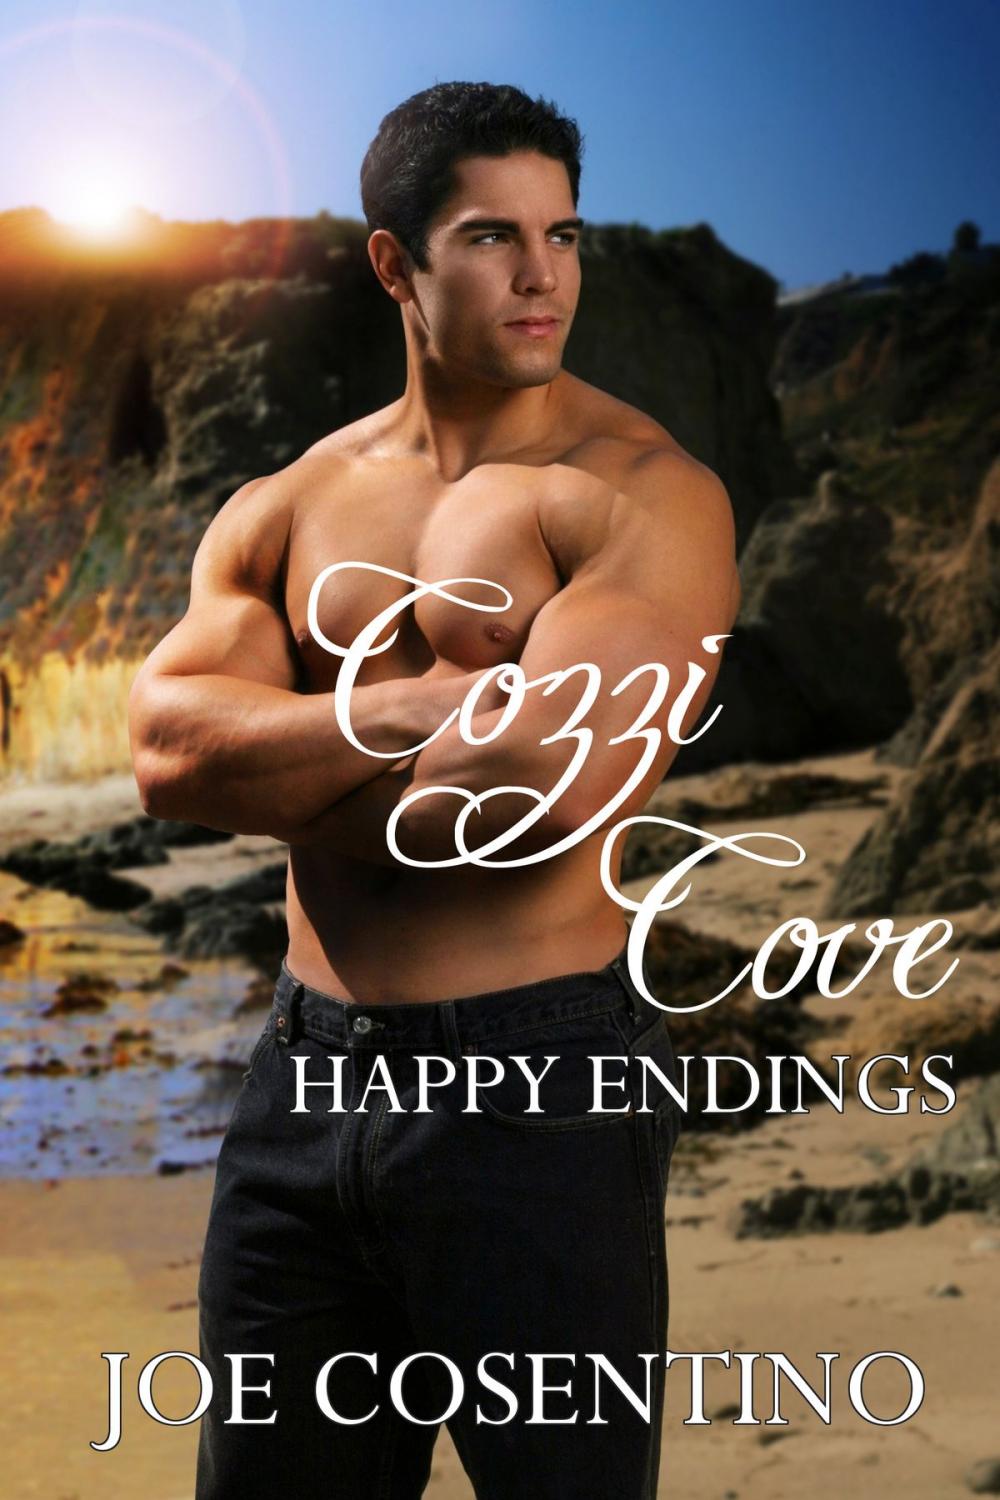 Big bigCover of Cozzi Cove: Happy Endings